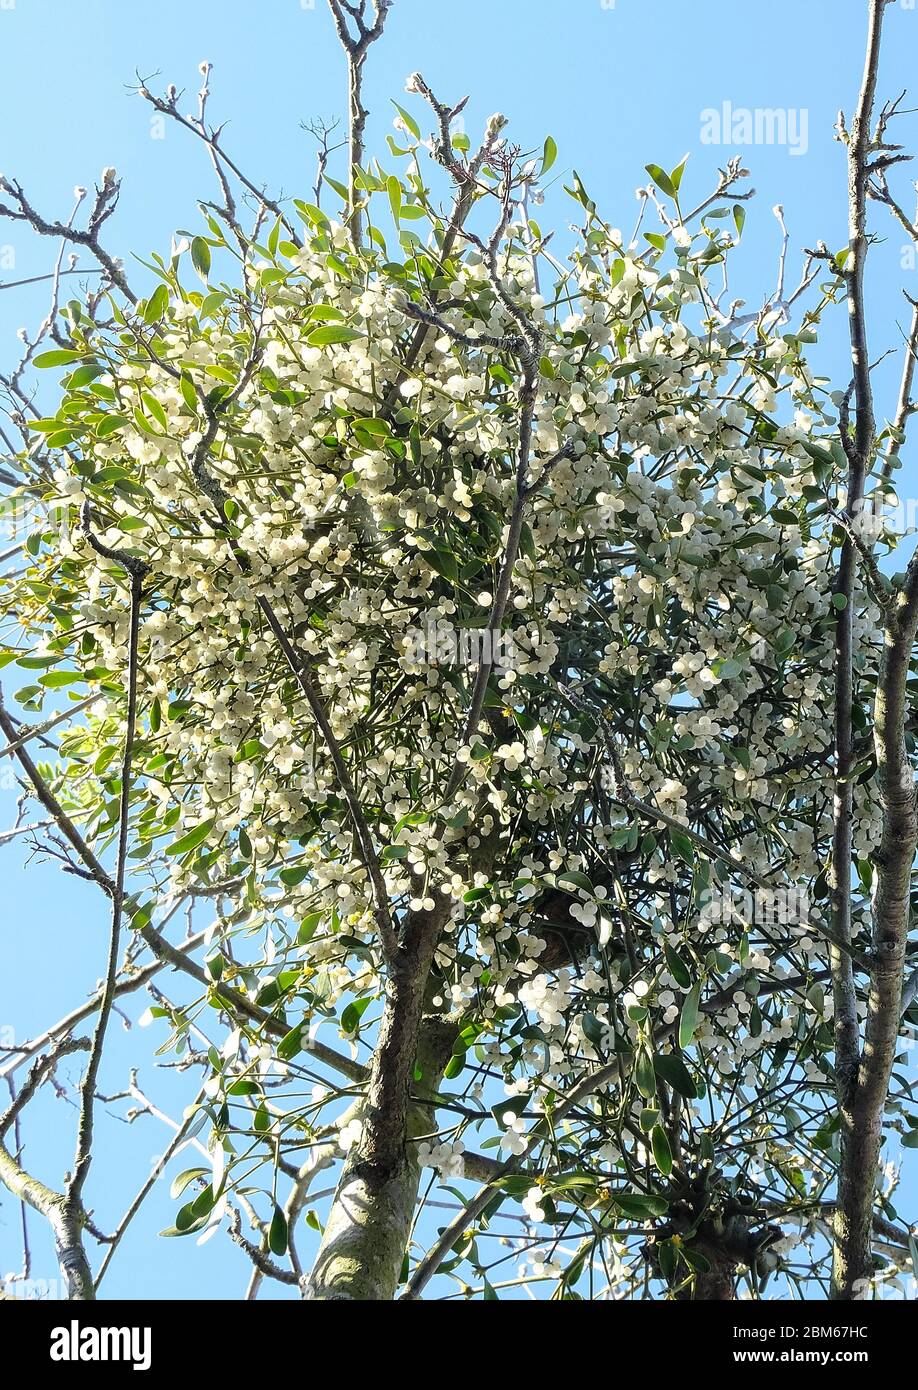 Misteltoe plant (Viscum Album) and berries growing in tree. Stock Photo